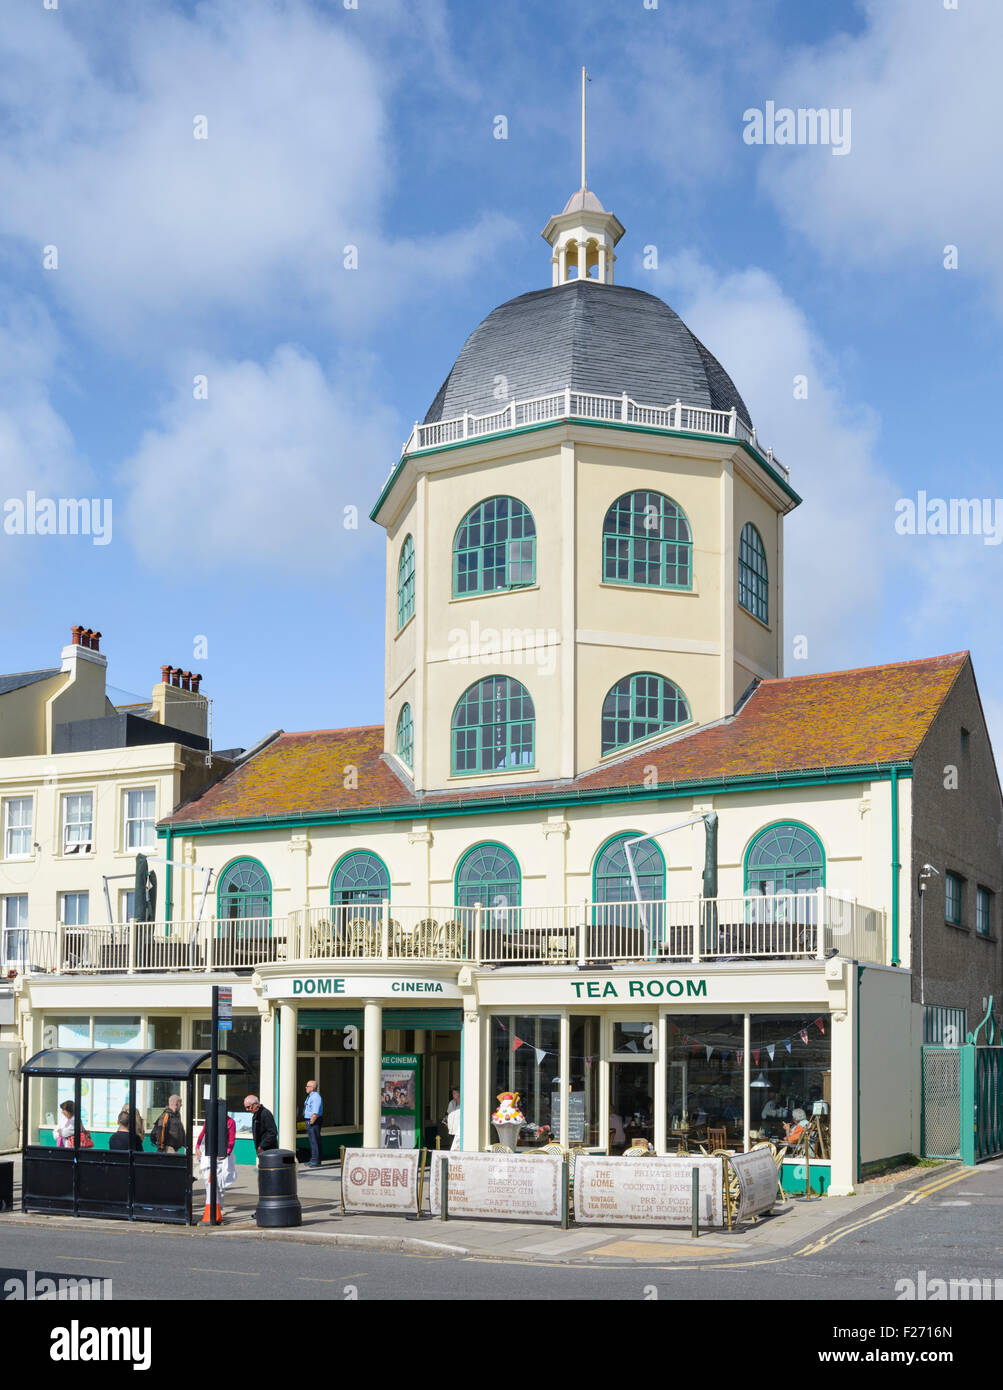 Kuppelkino Grade aufgeführten II Gebäude in Worthing, West Sussex, England, UK. Stockfoto